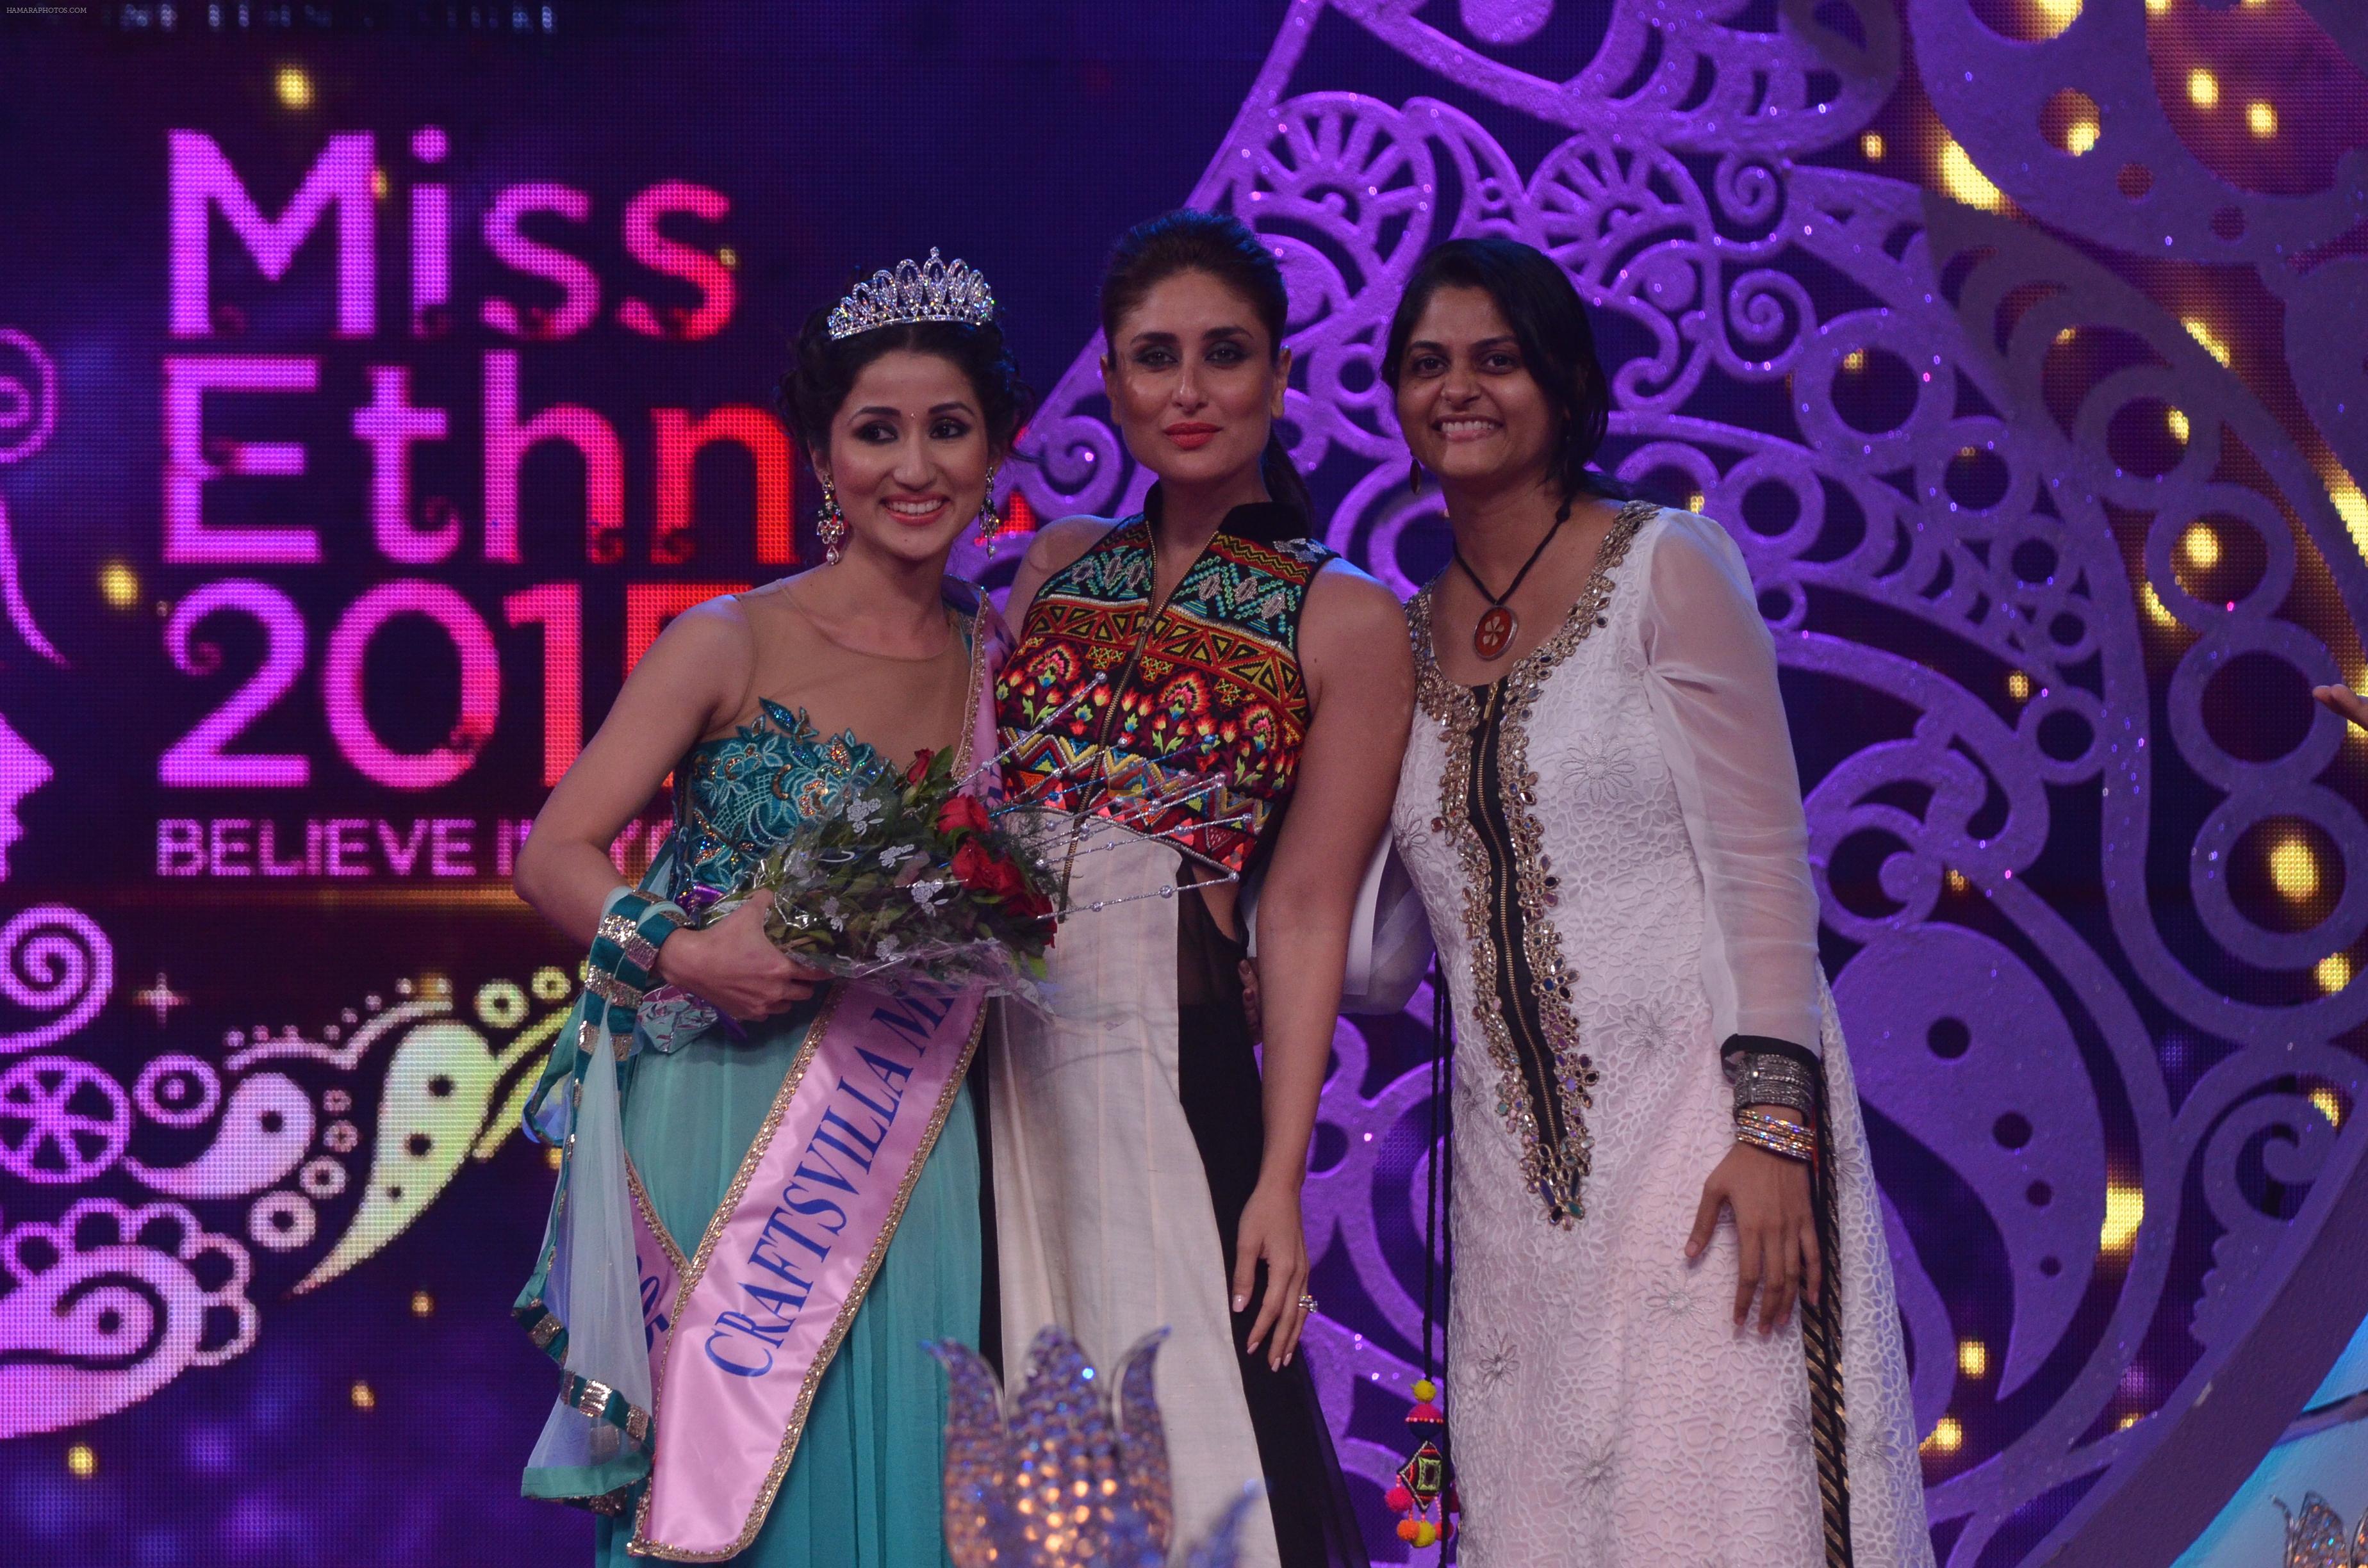 Kareena with Miss Ethnic winner Monisha Doley at Craftsvilla Miss Ethnic Show on 9th Oct 2015